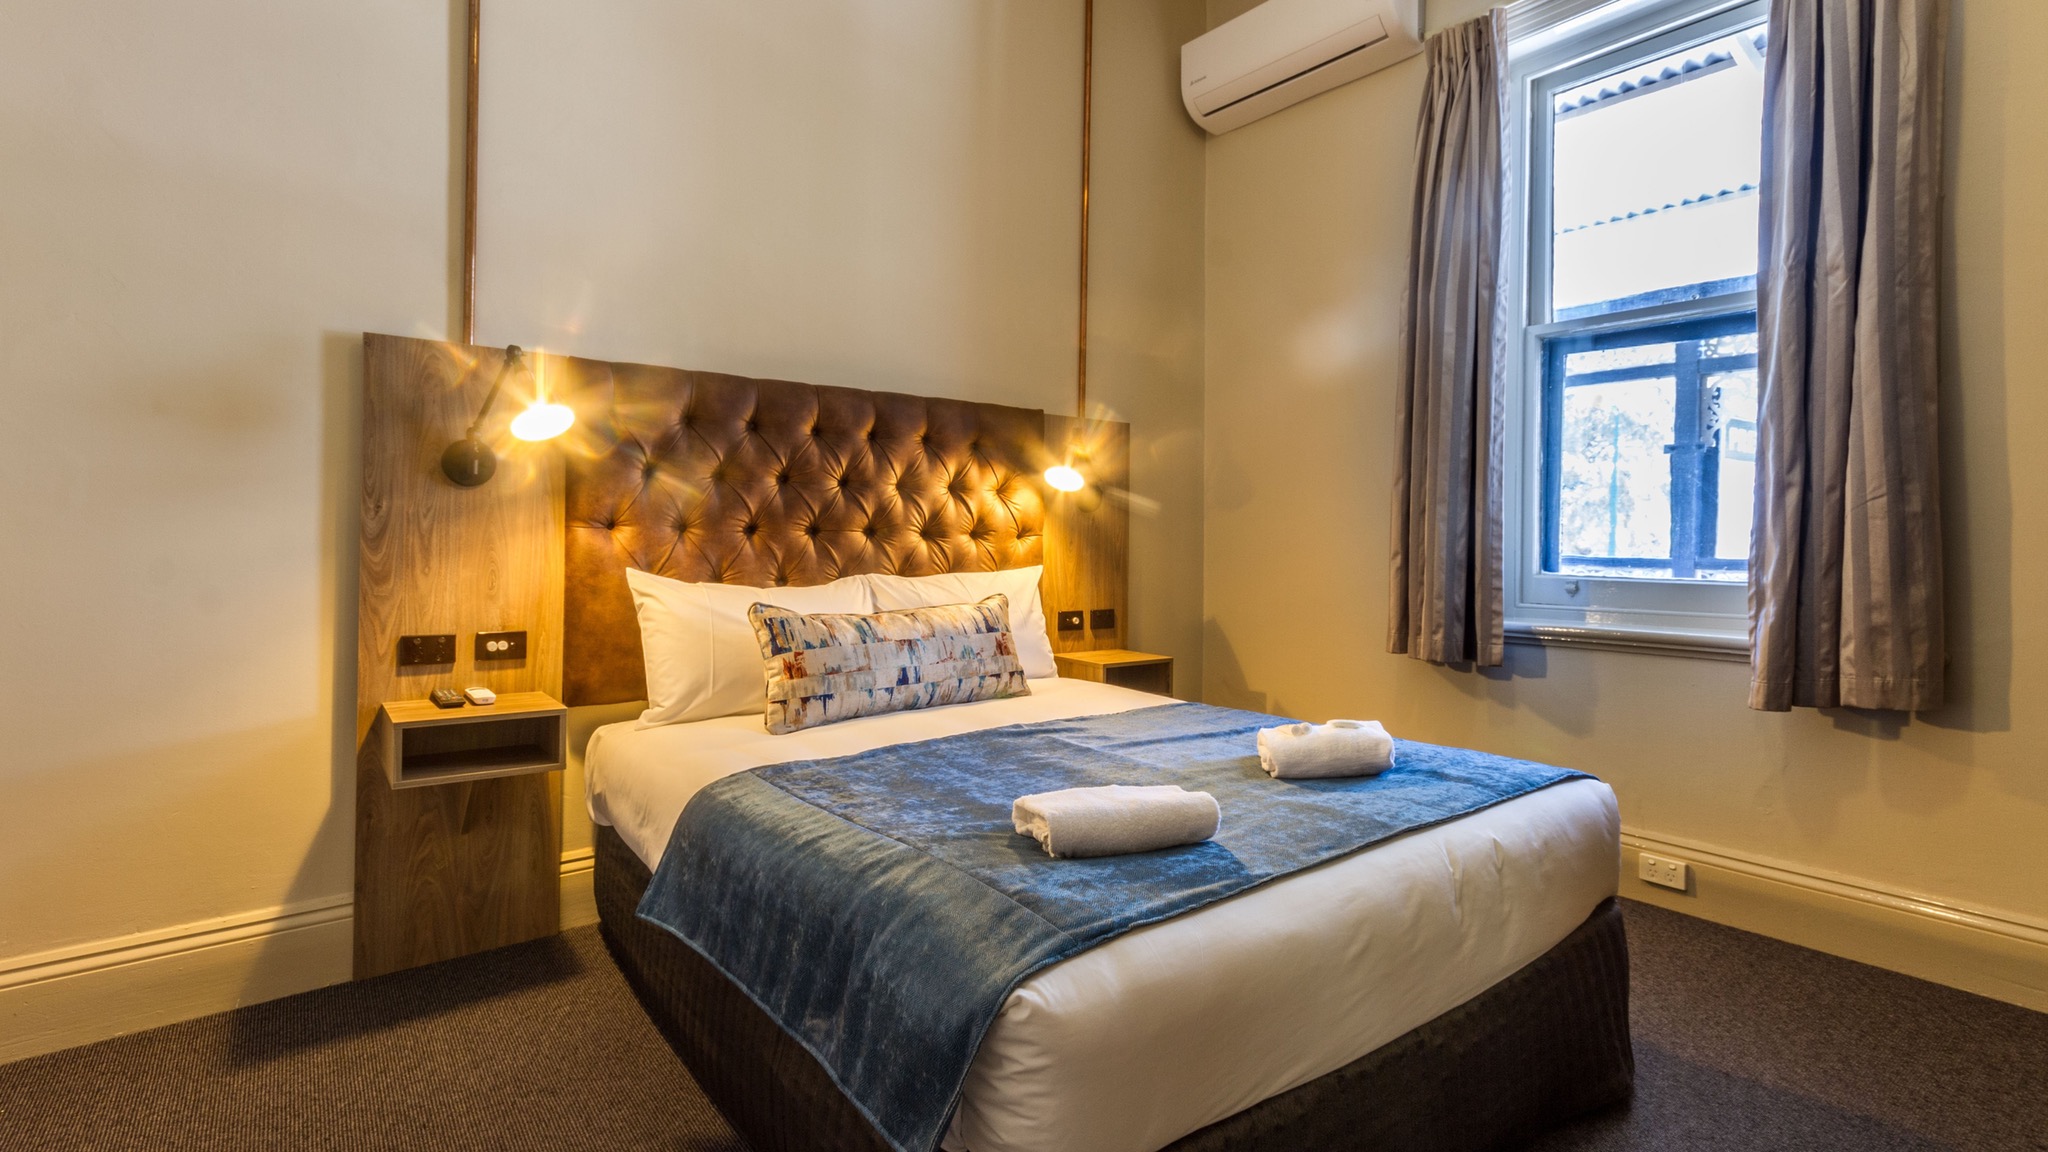 Pretoria Hotel Mannum - Accommodation Bookings